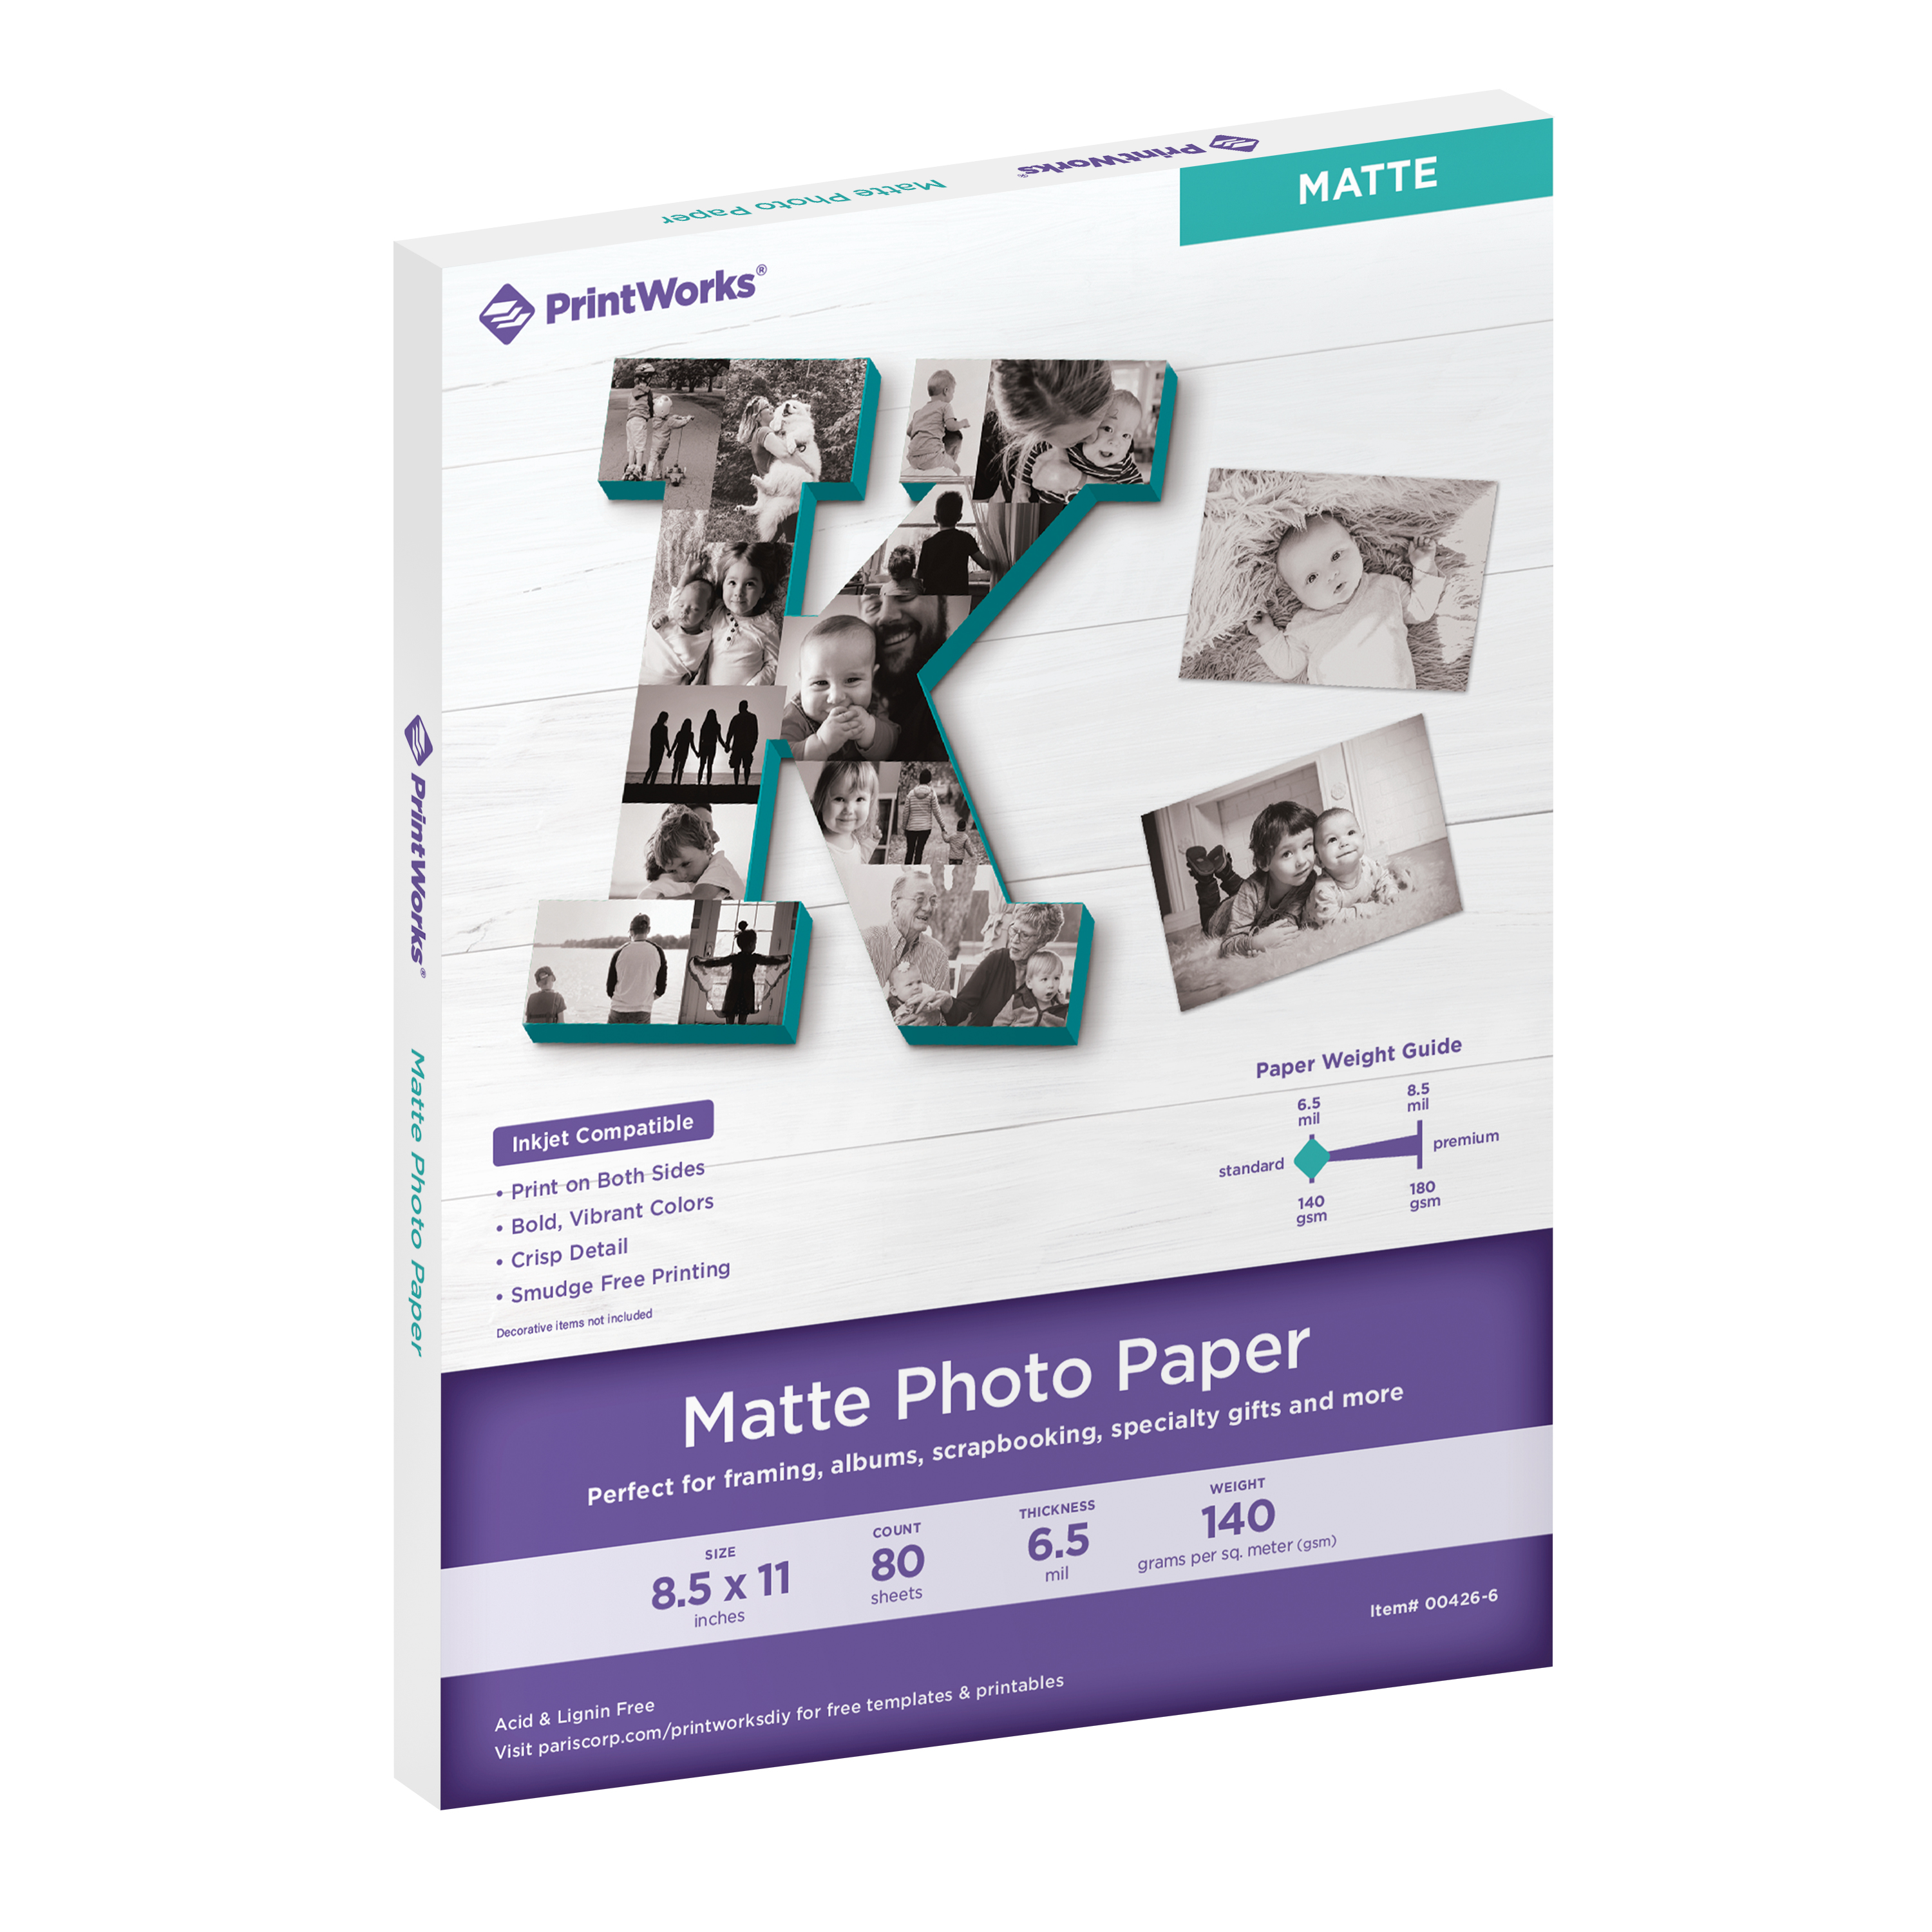 Matte 8.5 x 11 Photo Paper by PrintWorks